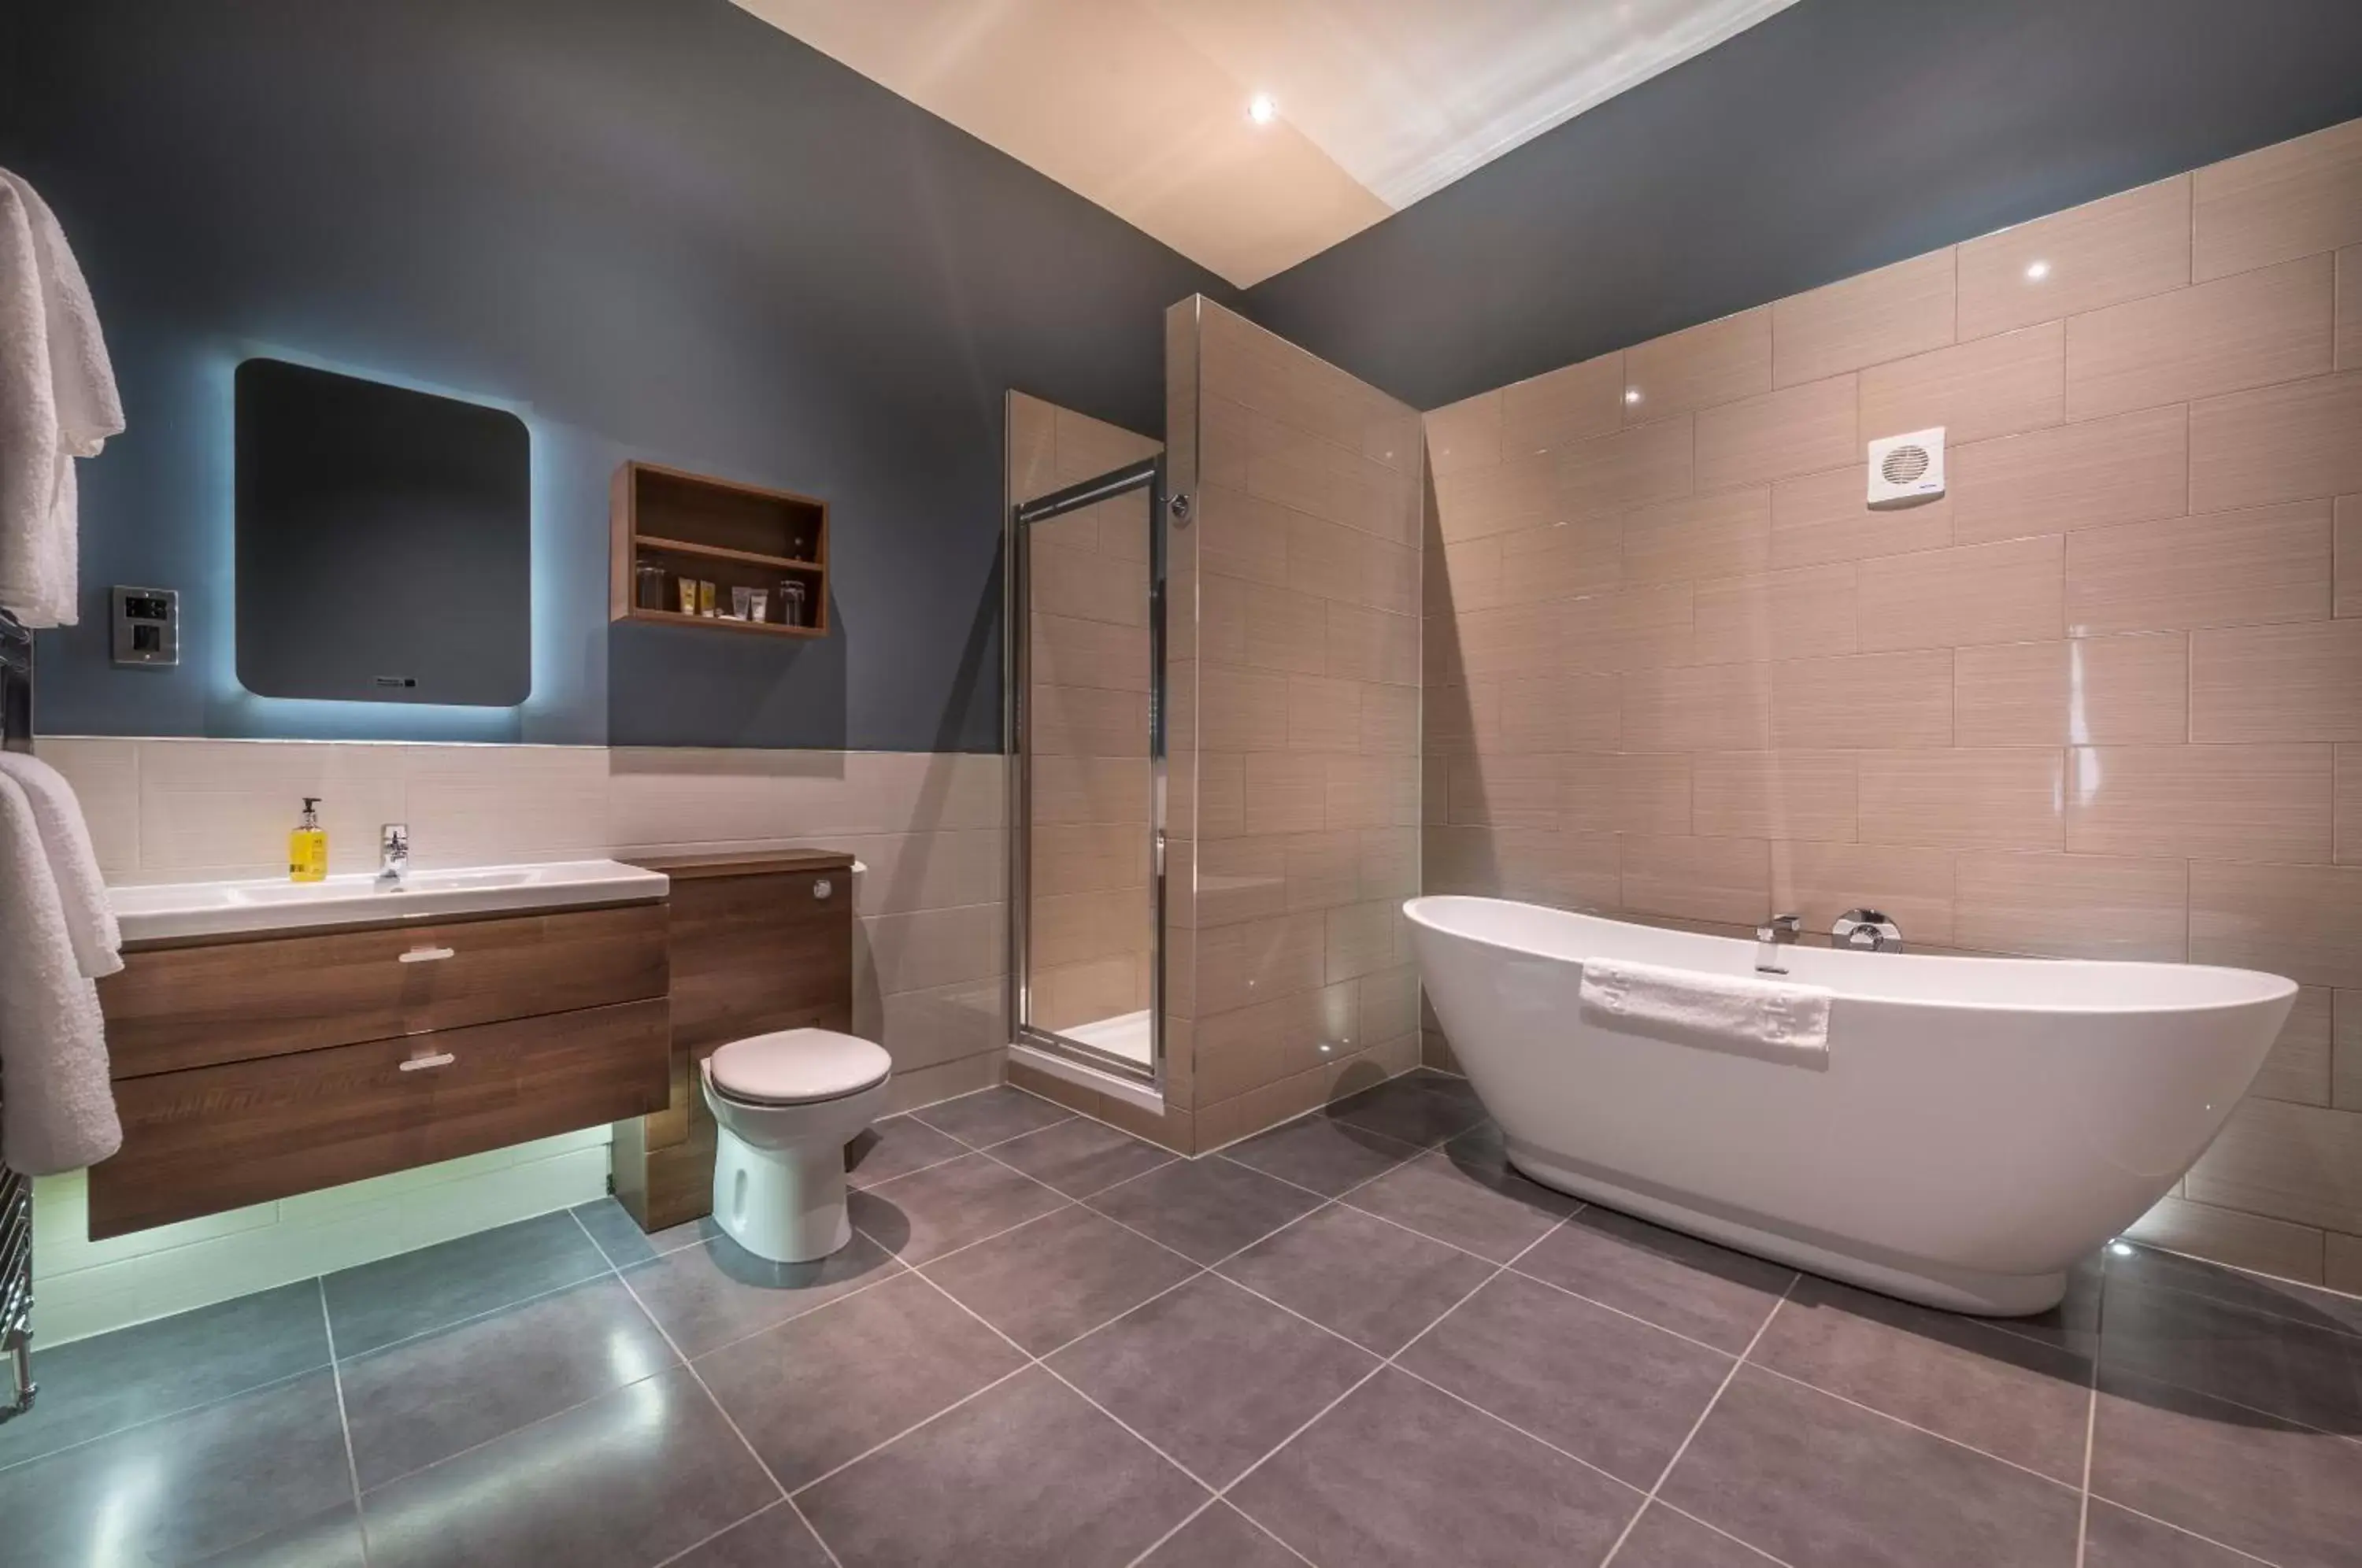 Bathroom in The Kings Head Hotel, Richmond, North Yorkshire